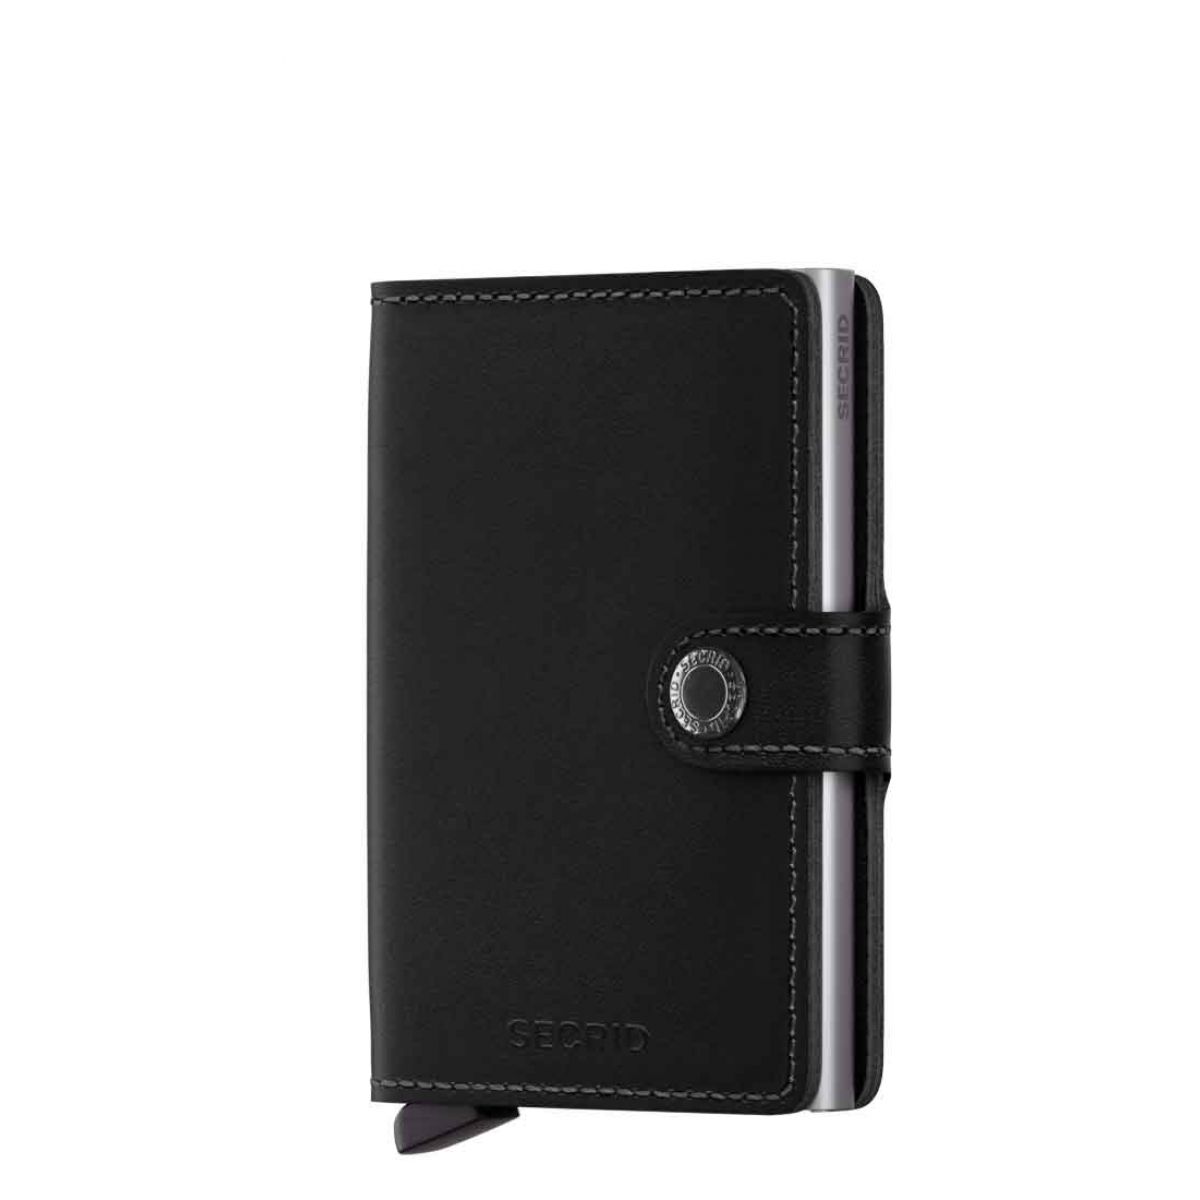 Secrid mini wallet leather original black- SECRID - product code ...